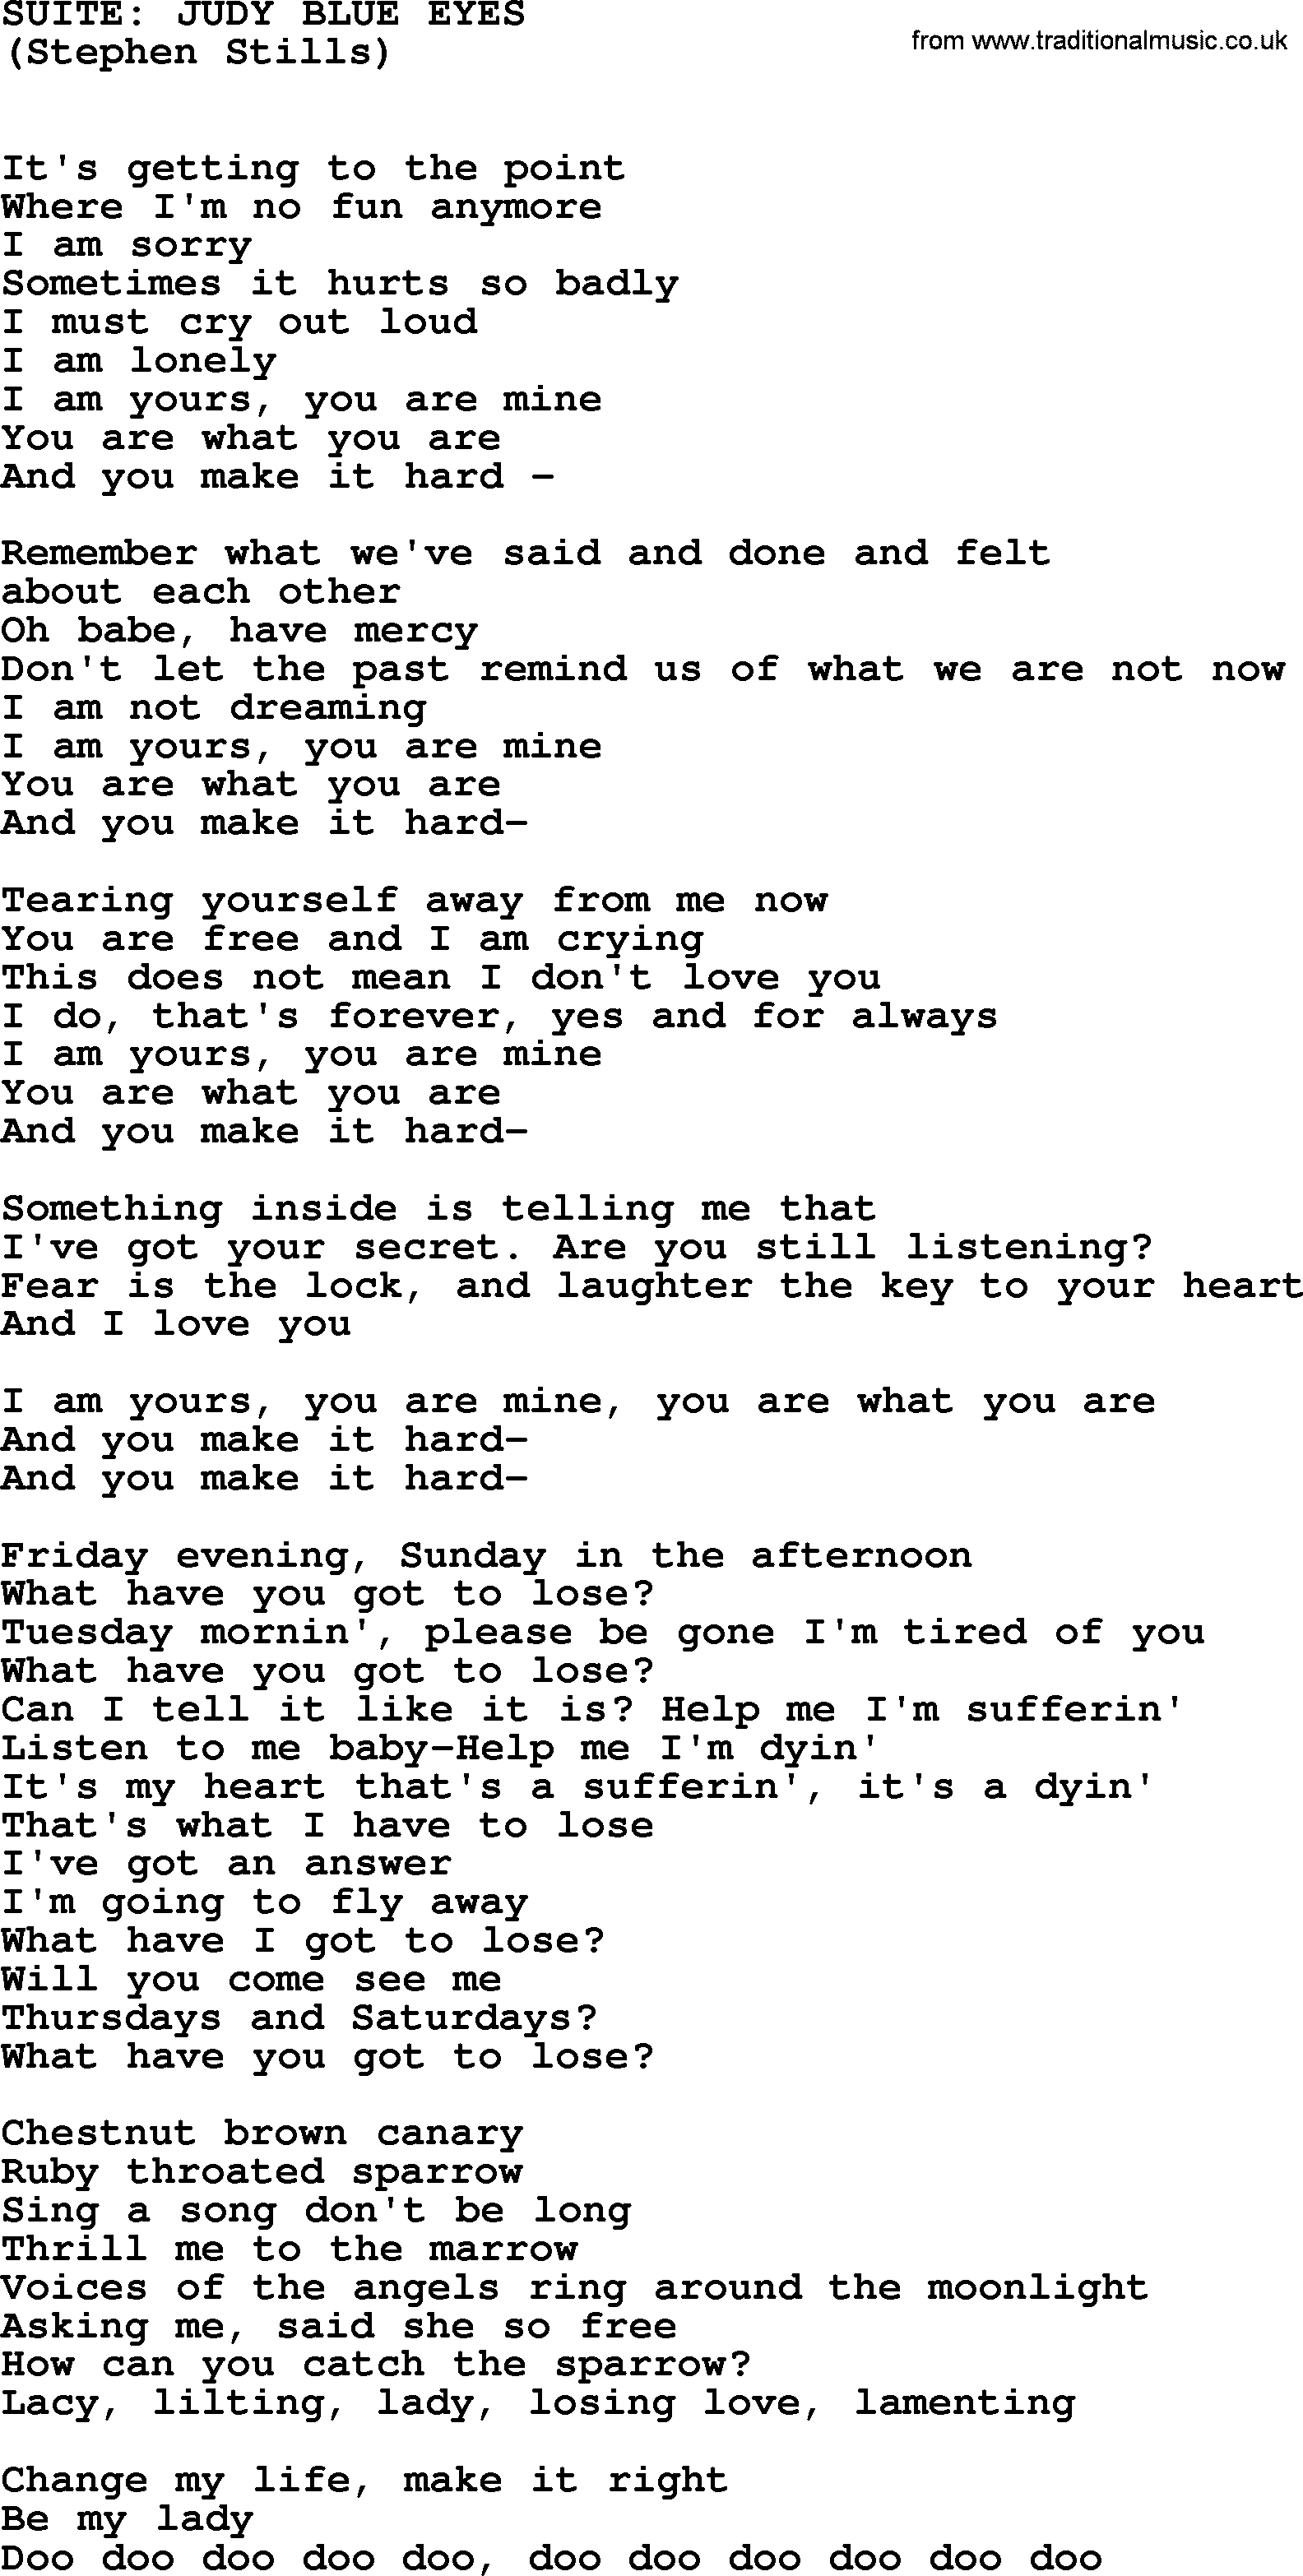 The Byrds song Suite Judy Blue Eyes, lyrics